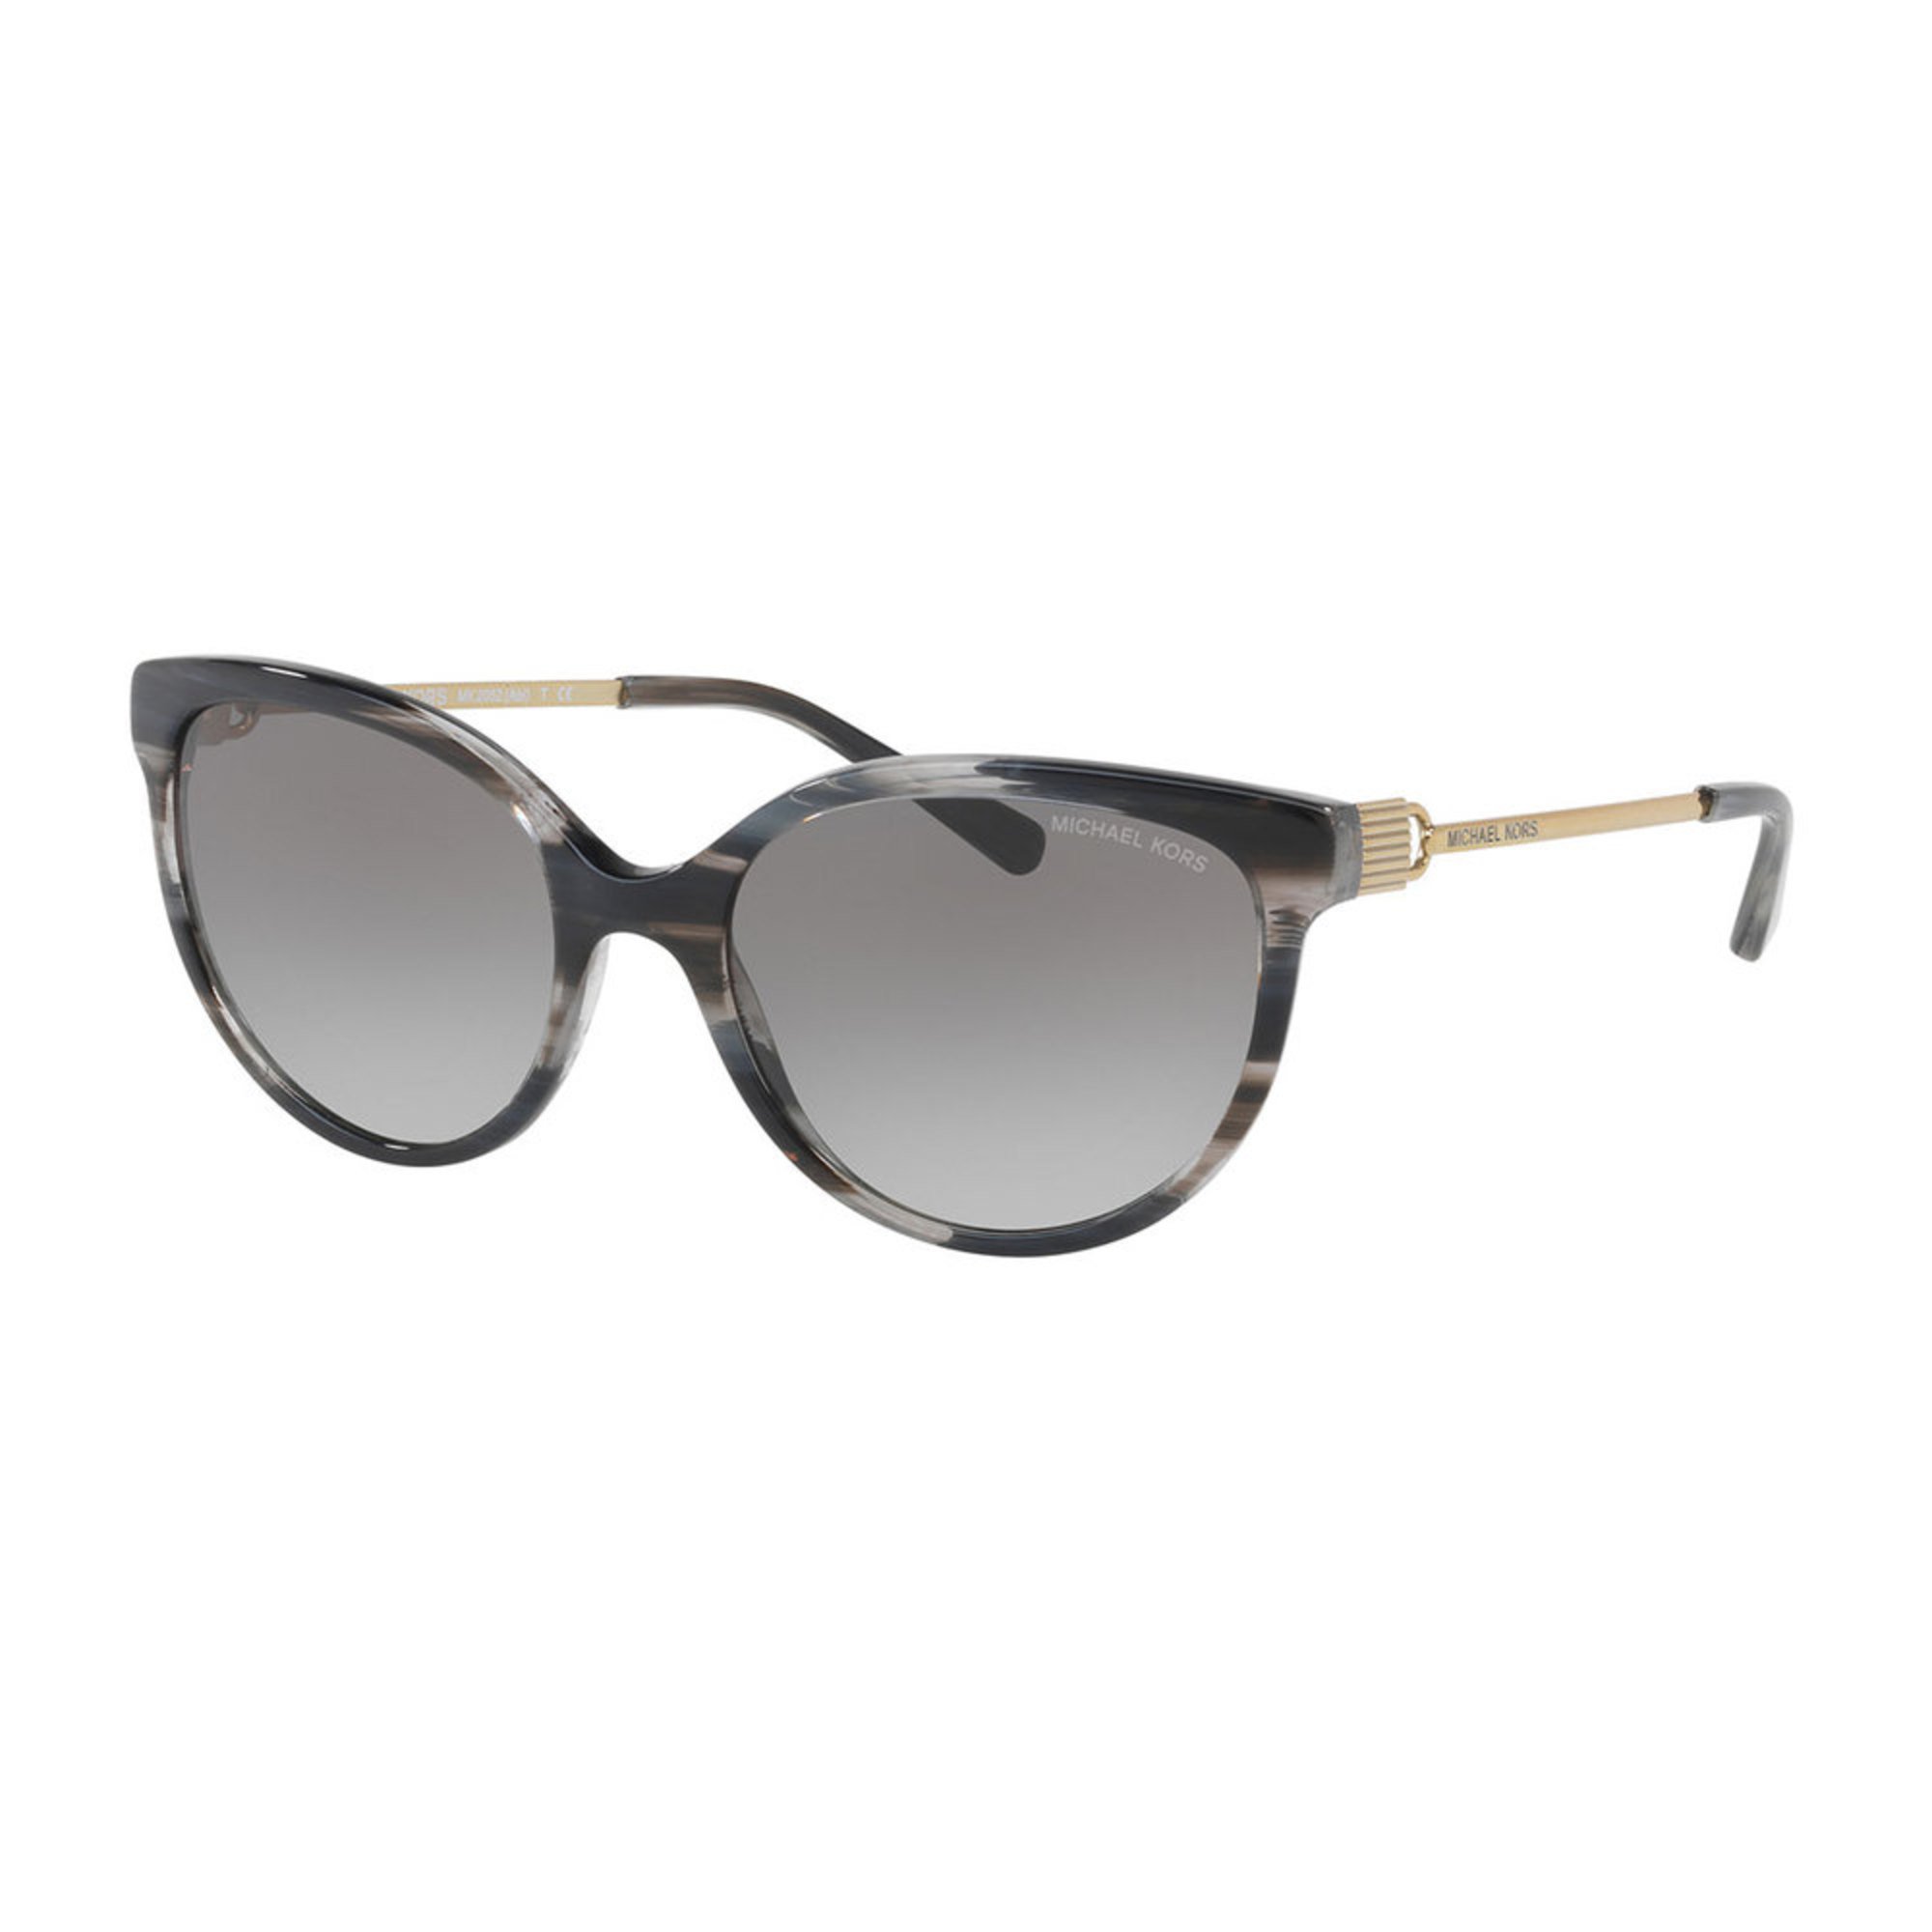 Michael Kors Women's Cat Eye Sunglasses | Women's Sunglasses ...